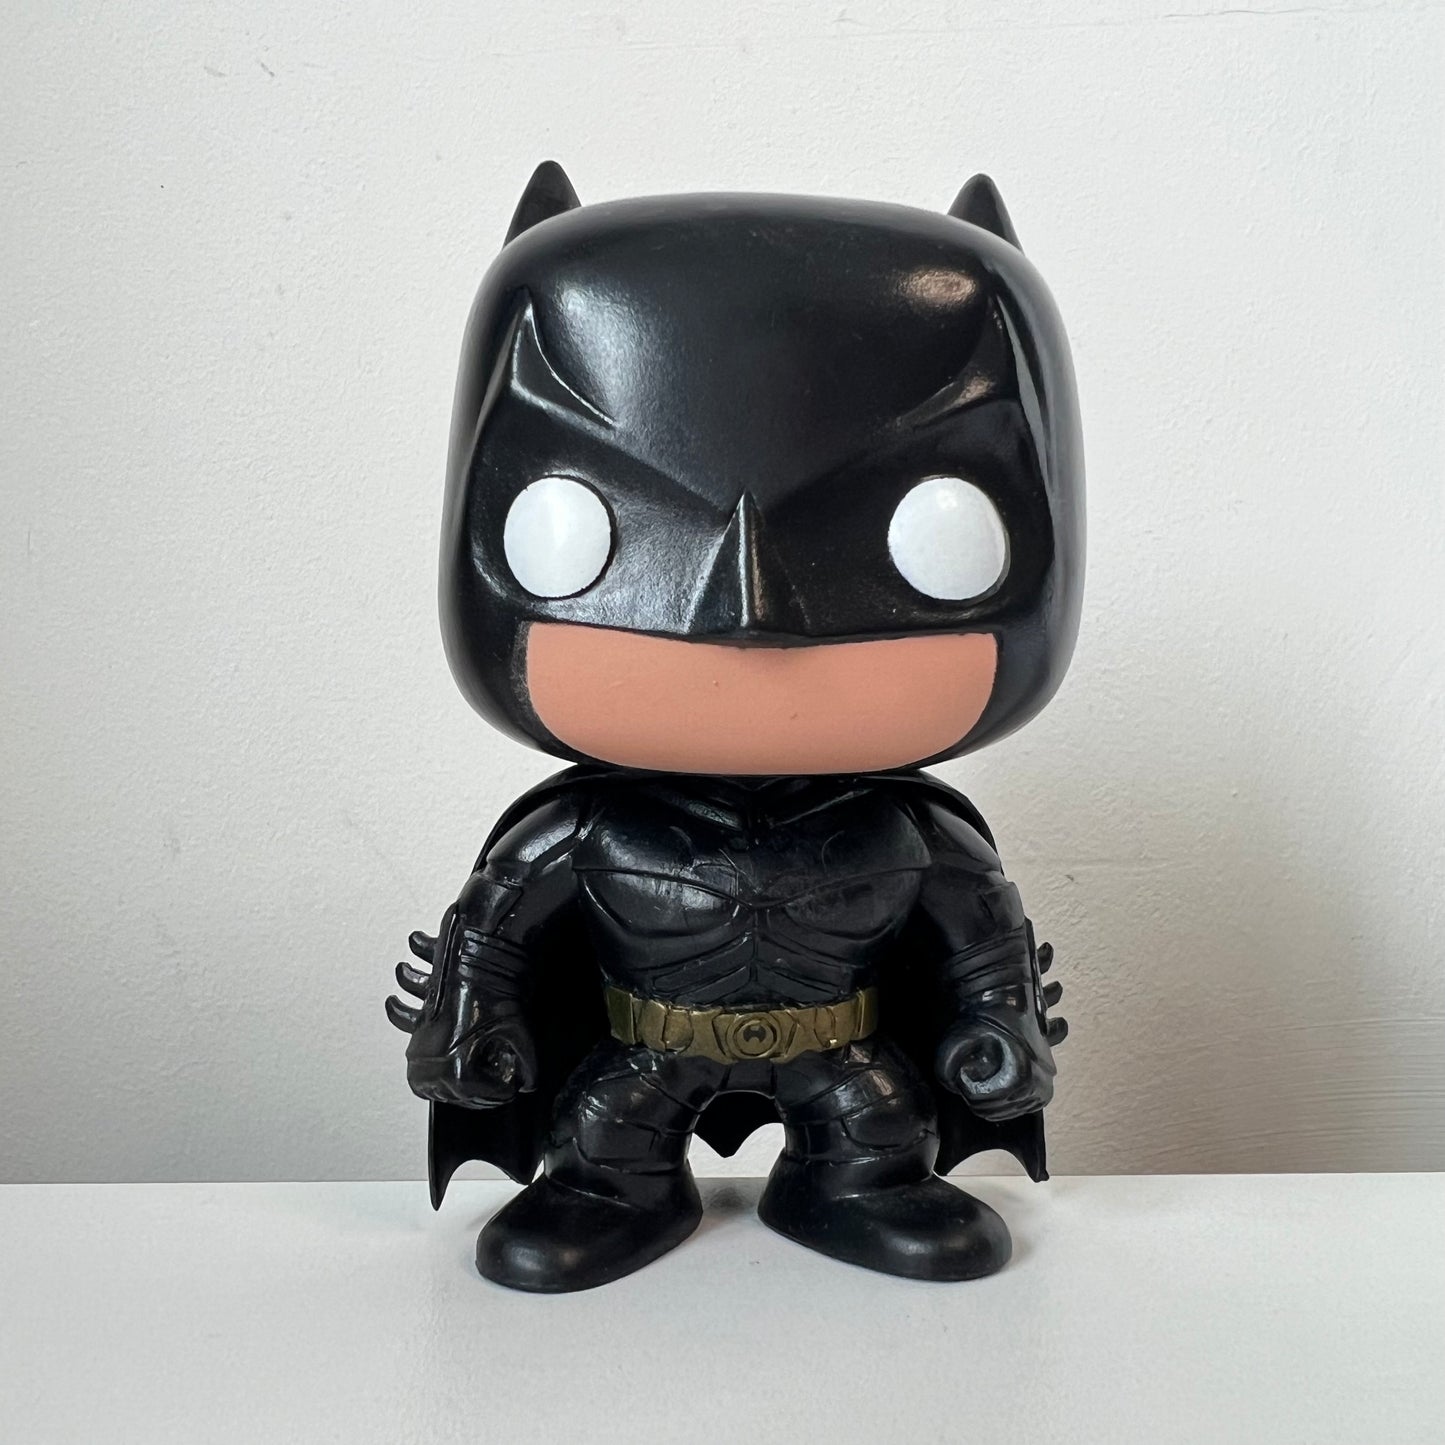 Batman The Dark Knight - Batman 19 Funko Pop (No Box or Insert Included)